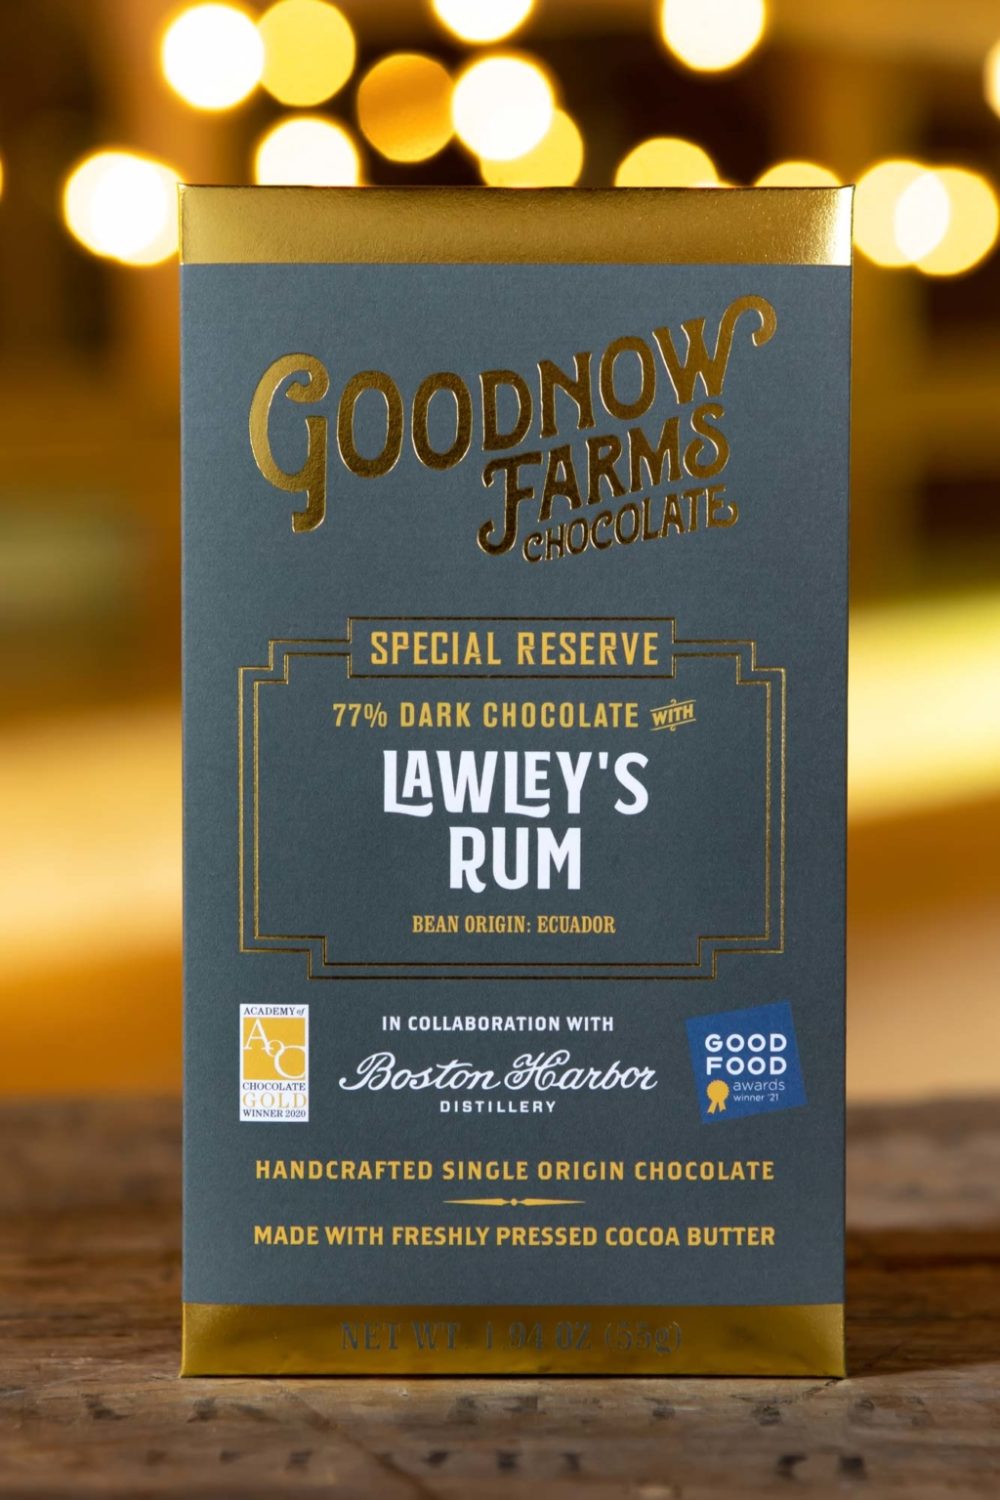 Goodnow Farms Special Reserve Ecuador 77% Dark Chocolate Bar with Lawley's Rum